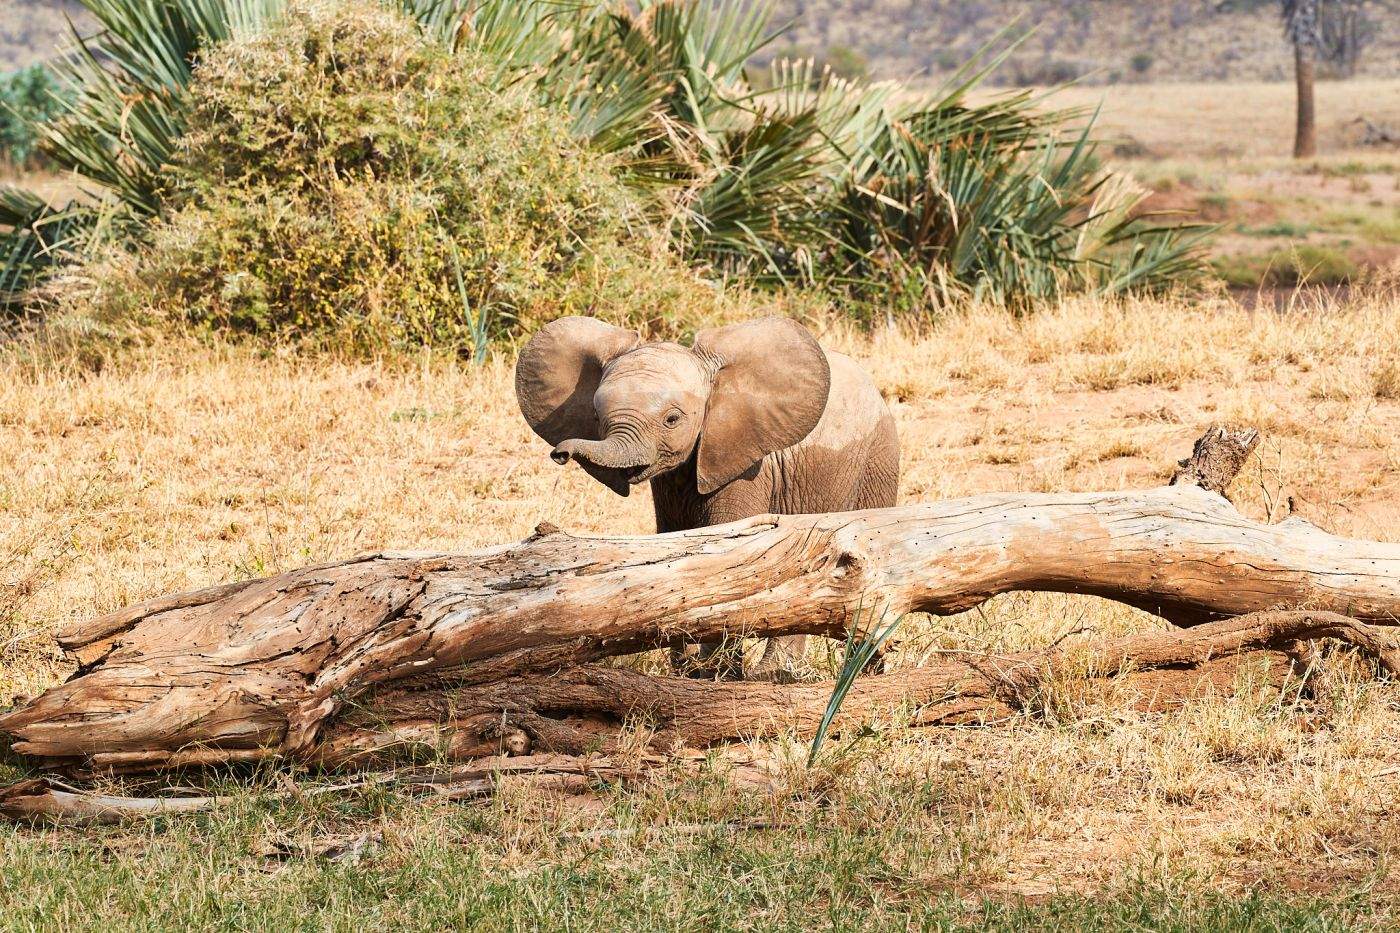 Hide and seek in Samburu: A young elephant explores the savanna